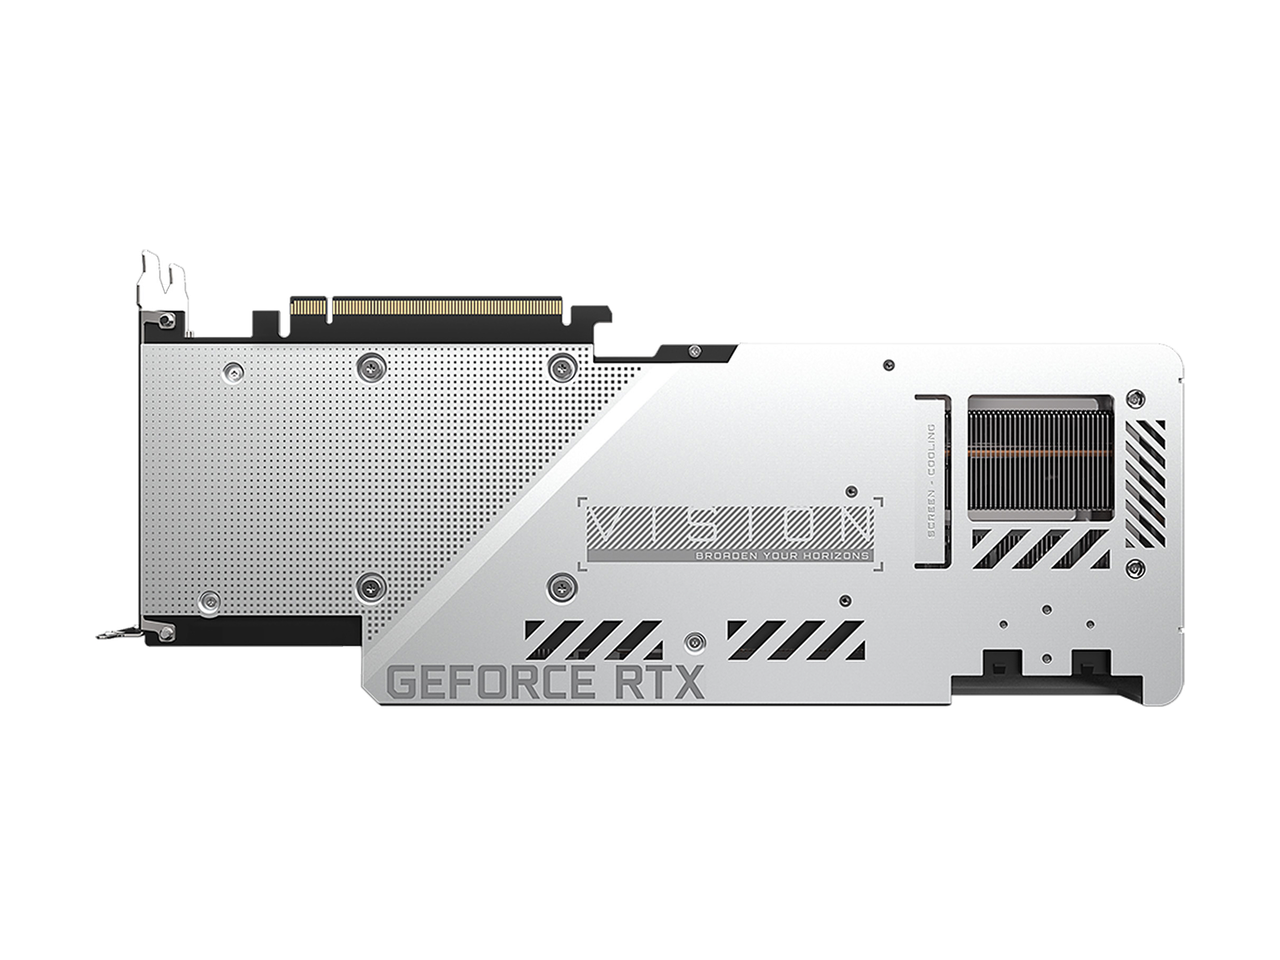 GIGABYTE Vision OC GeForce RTX 3080 10GB GDDR6X PCI Express 4.0 ATX Video Card GV-N3080VISION OC-10GD (rev. 2.0) (LHR)